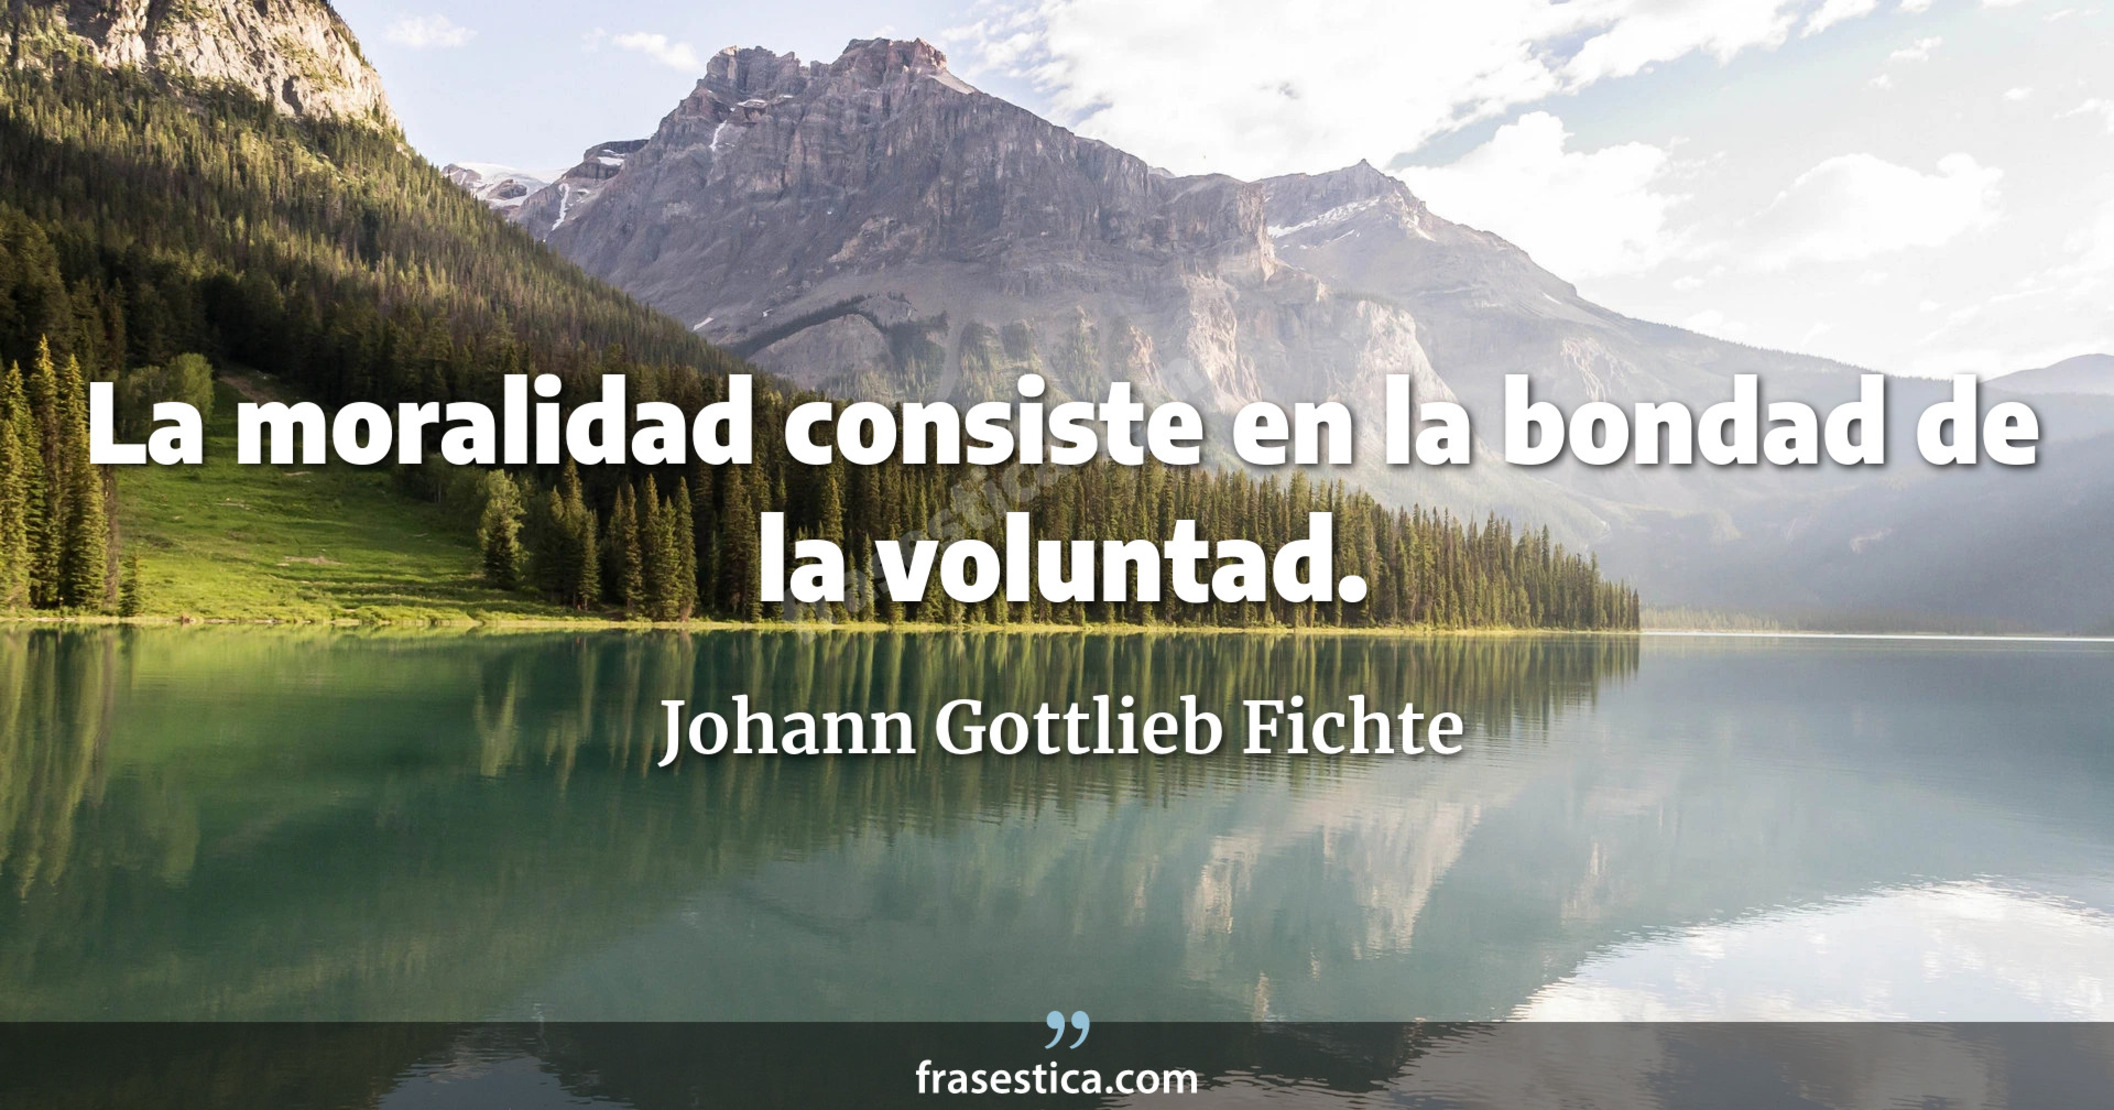 La moralidad consiste en la bondad de la voluntad. - Johann Gottlieb Fichte